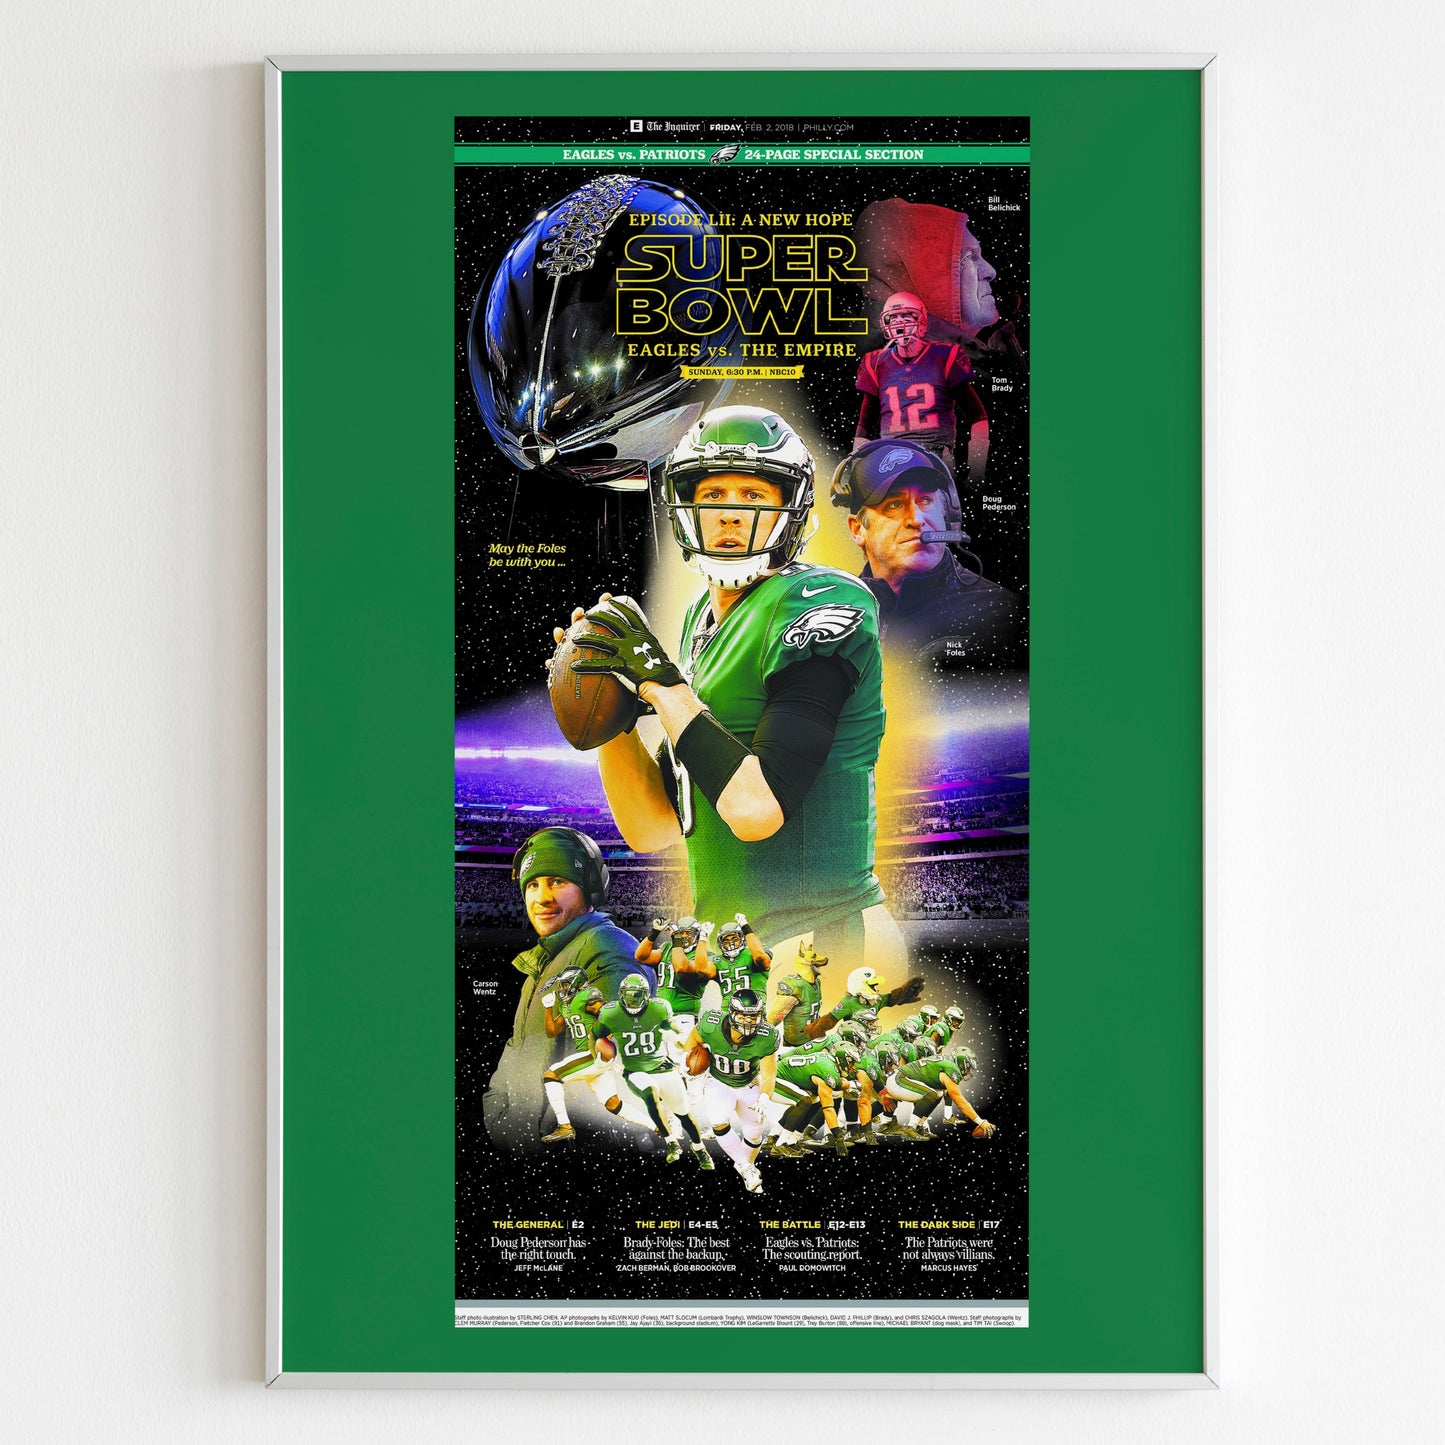 Philadelphia Eagles 2018 Super Bowl NFL Champions Front Cover The Philadelphia Inquirer Newspaper Poster, Football Team Star Wars Print